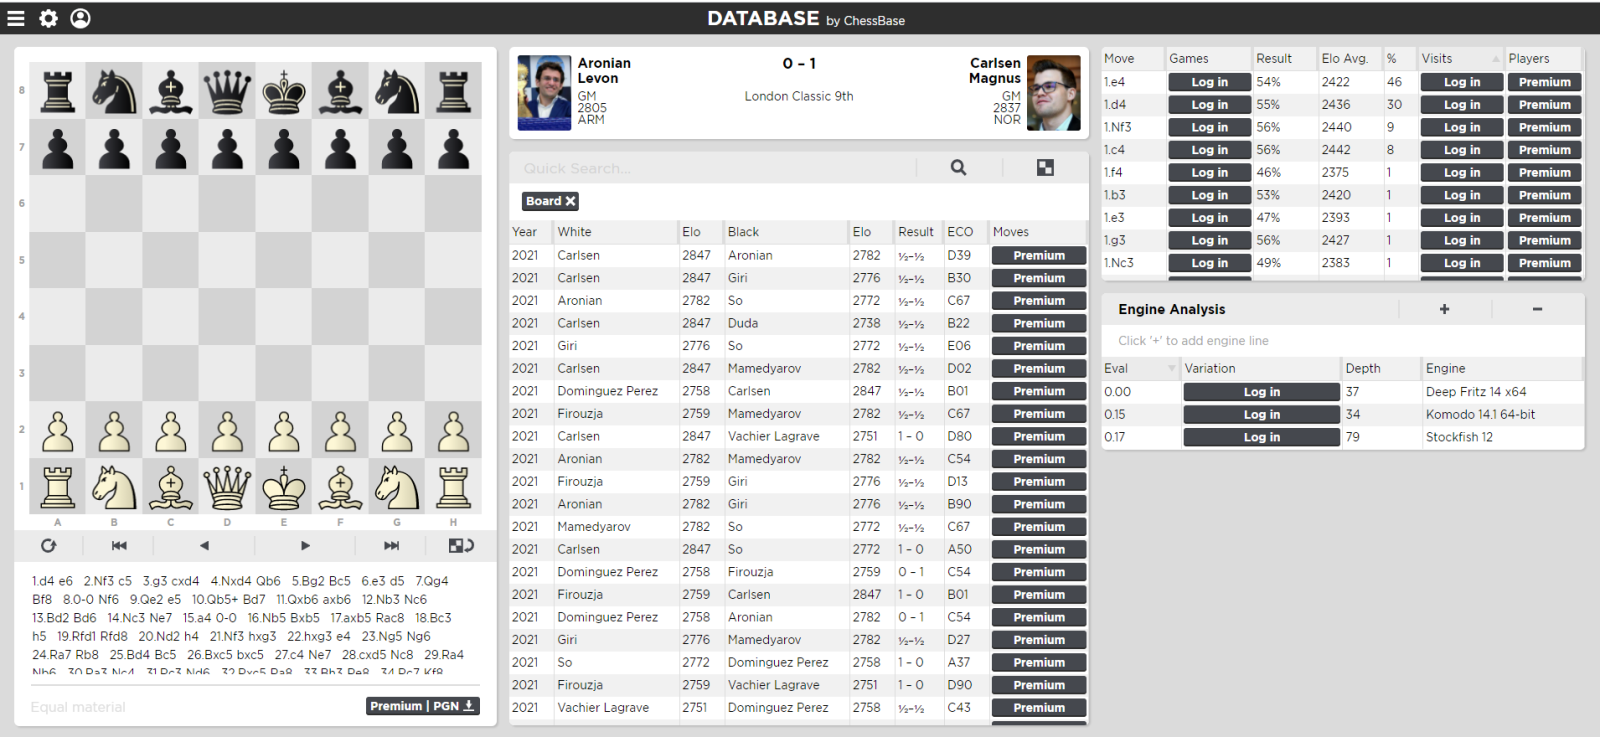 ChessBase Online by ChessBase GmbH